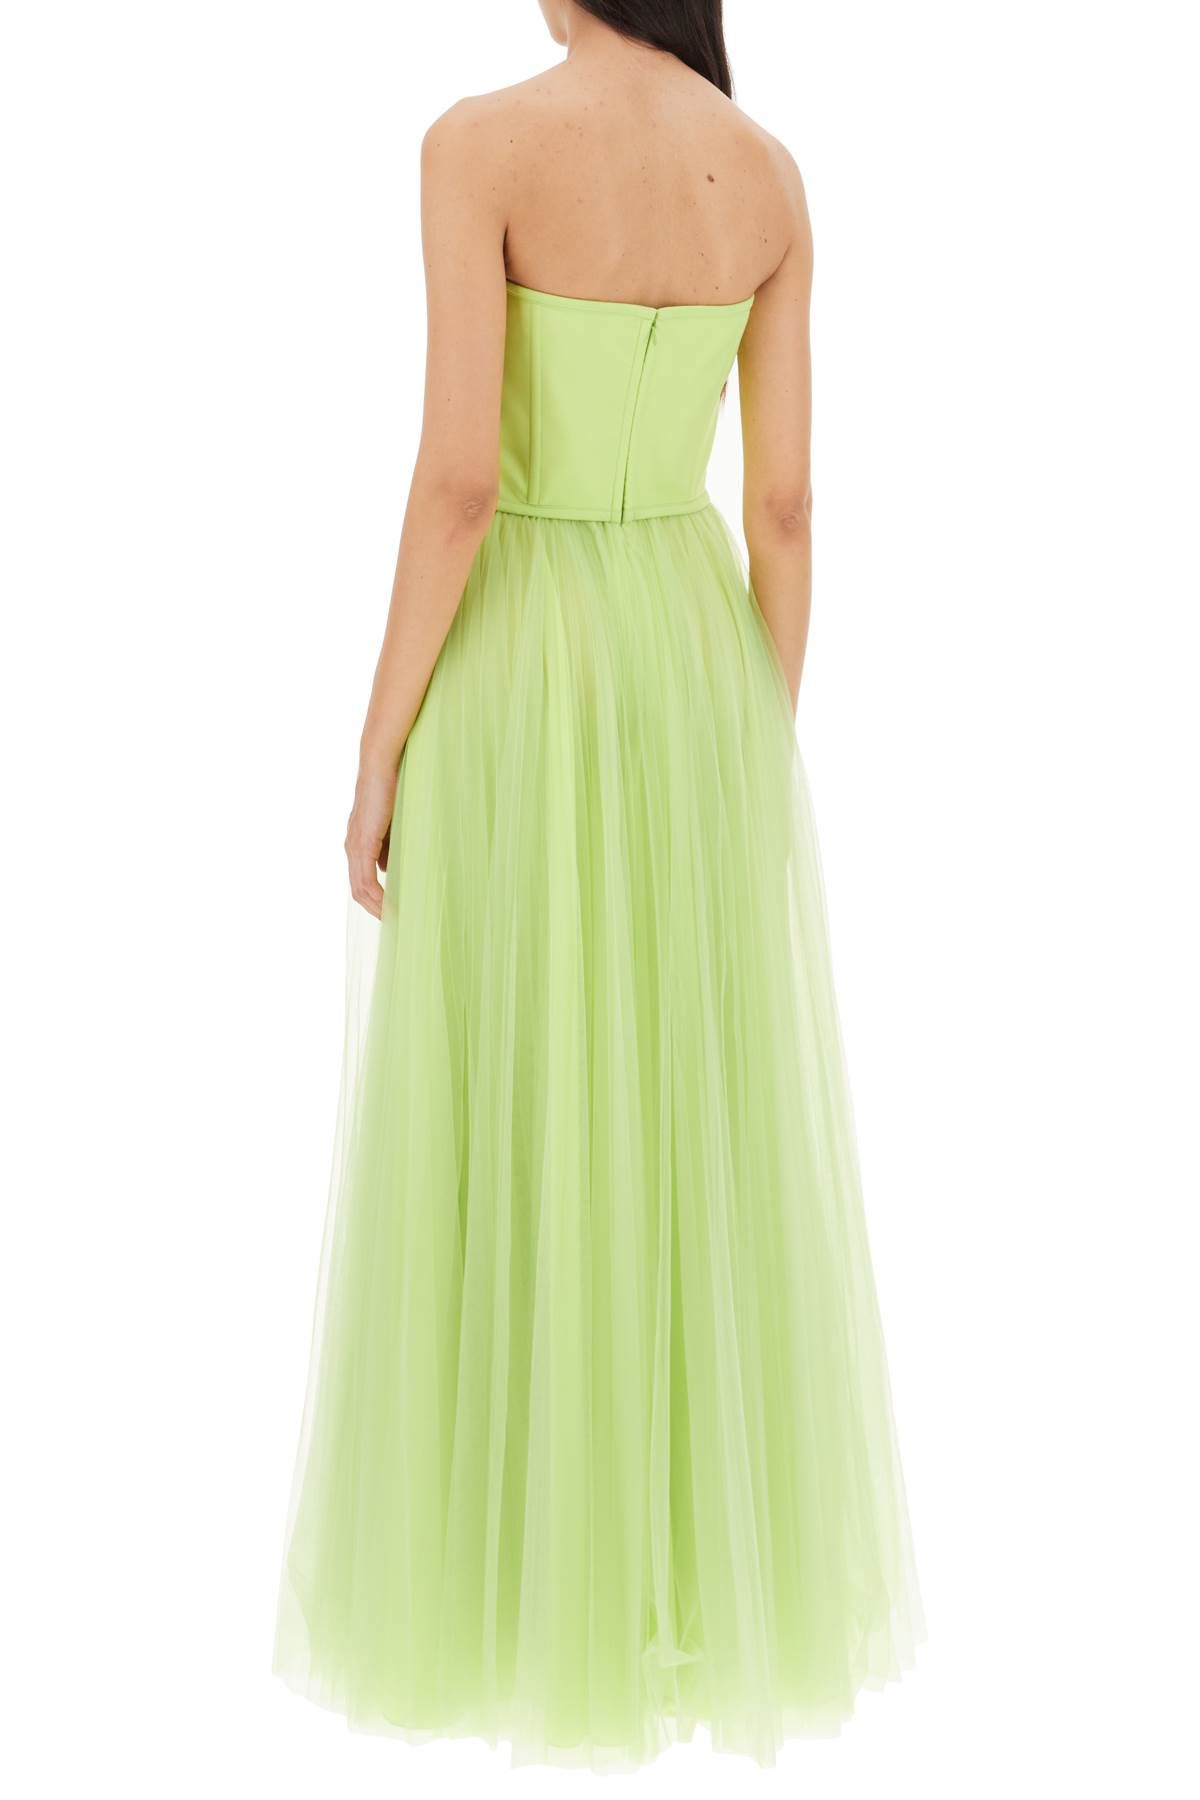 Shop 19:13 Dresscode Long Bustier Dress With Shaped Neckline In Fluo,green